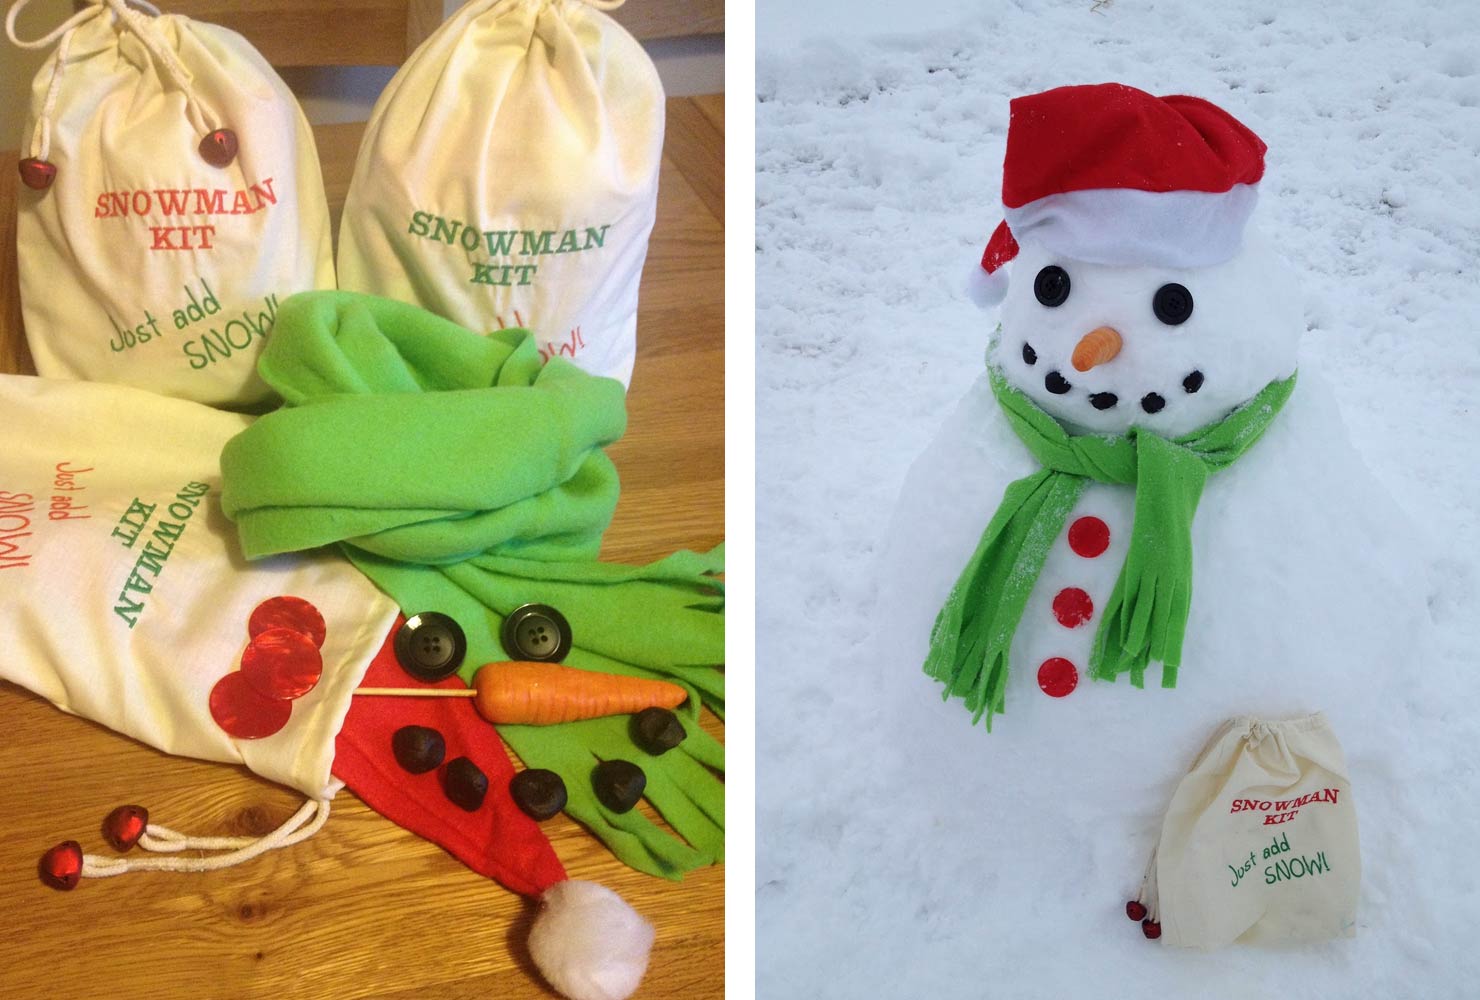 Snowman and snowman kit.